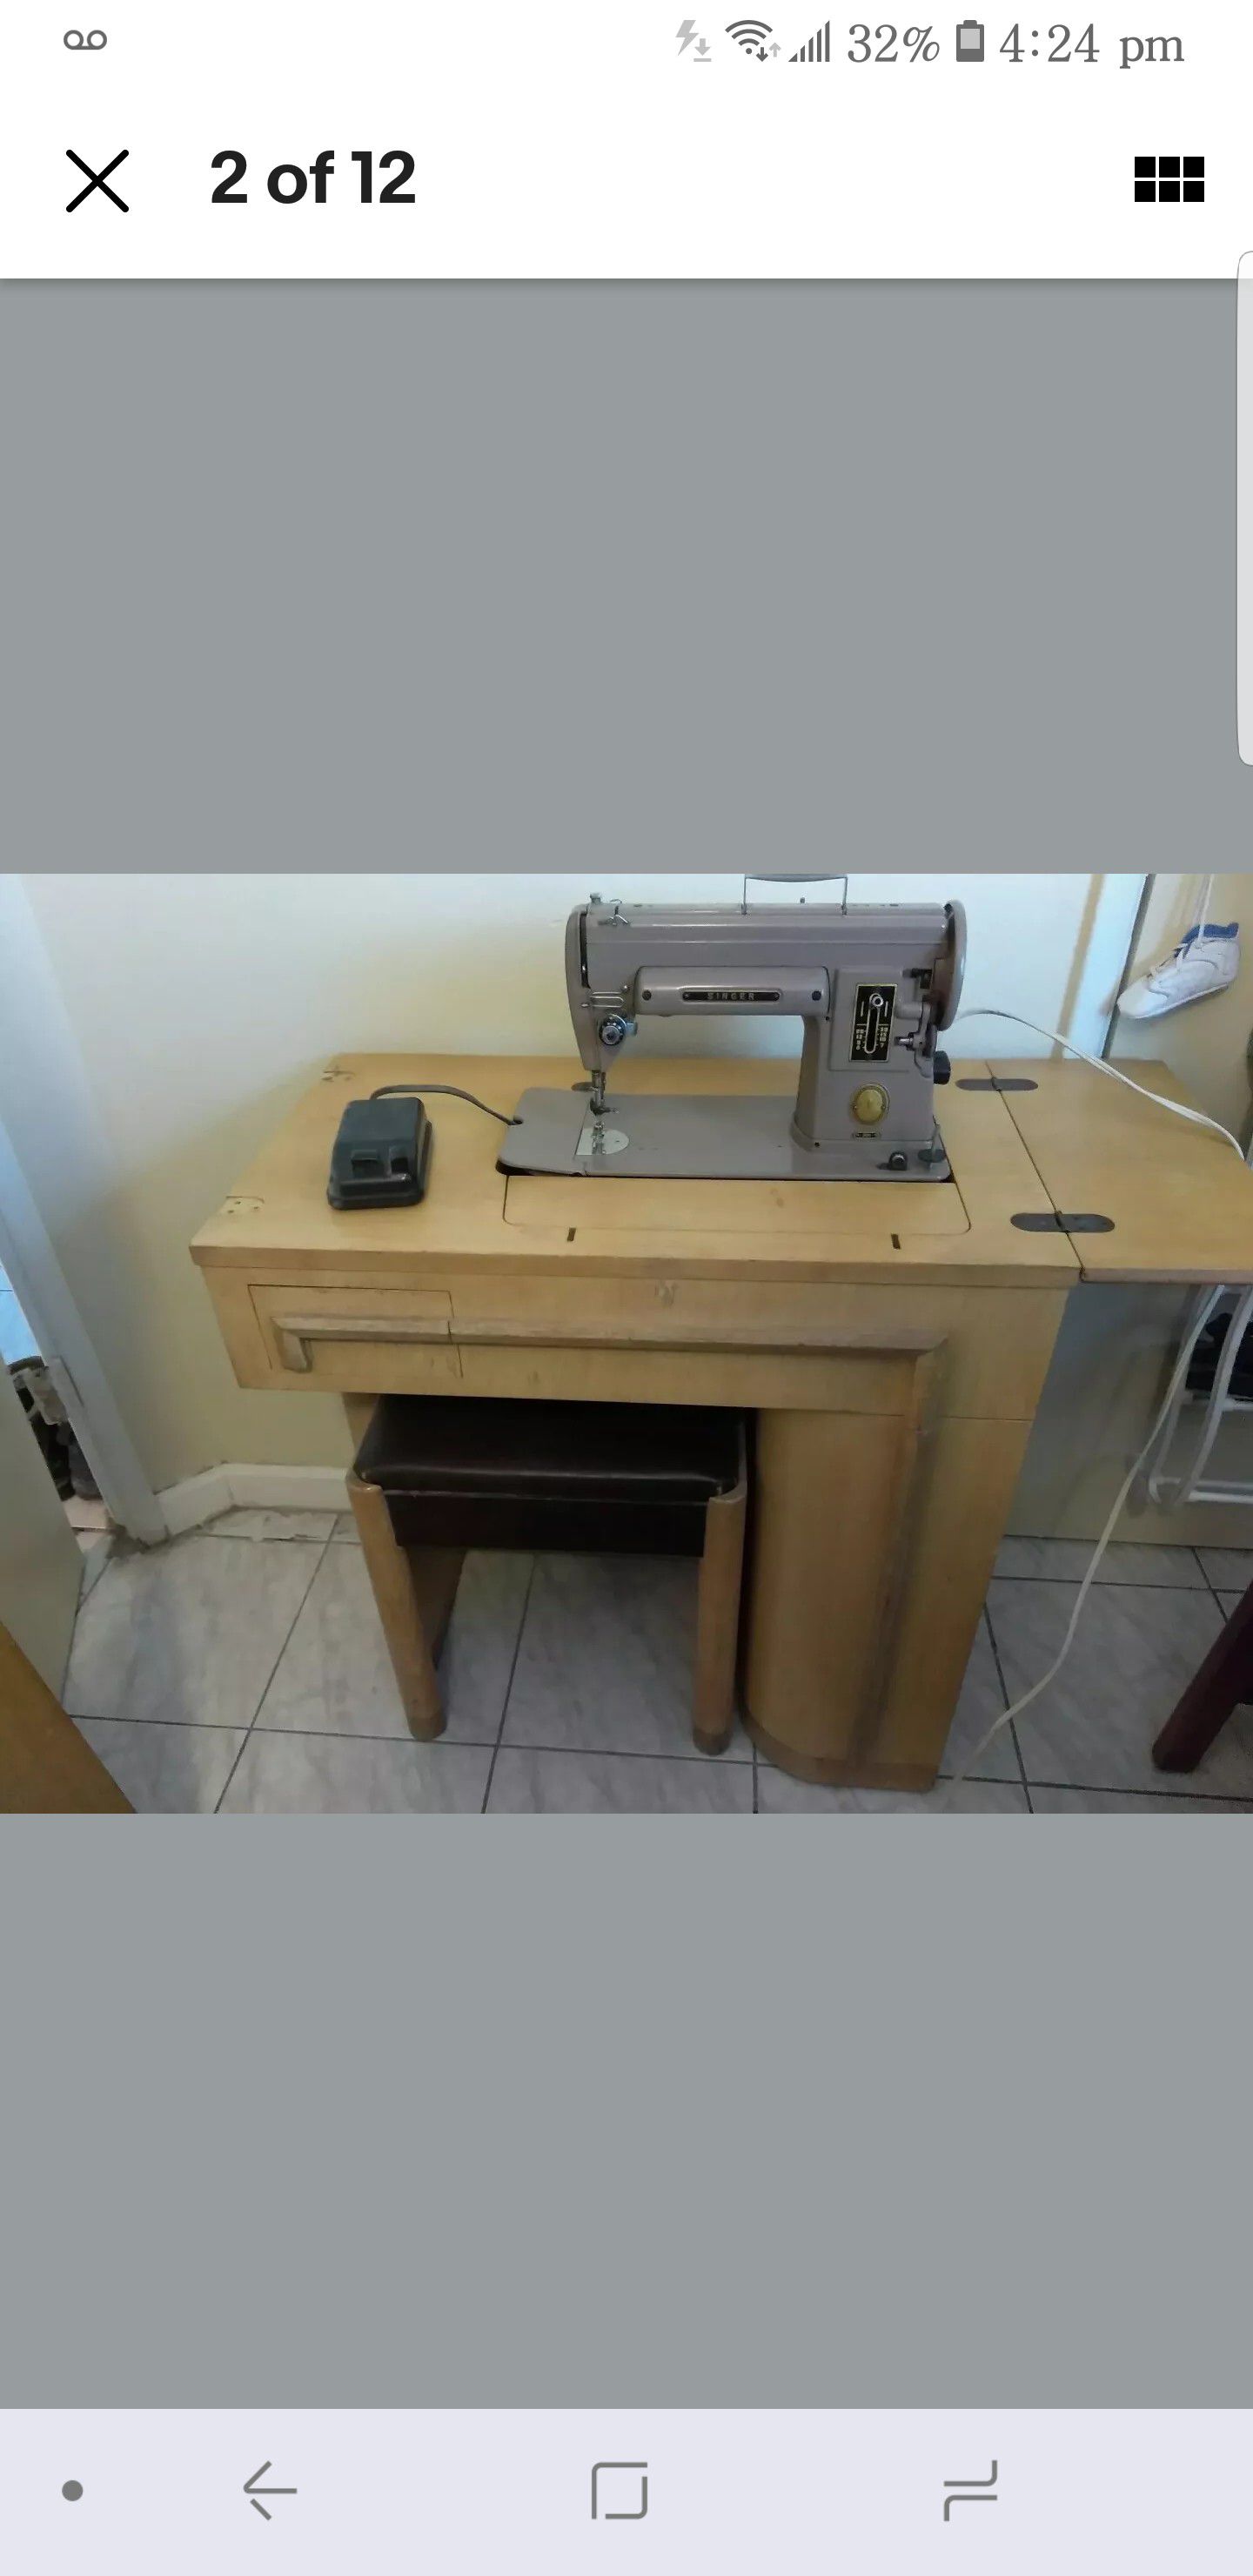 Antique Singer Sewing Machine #301. $225. Pickup in Oakdale